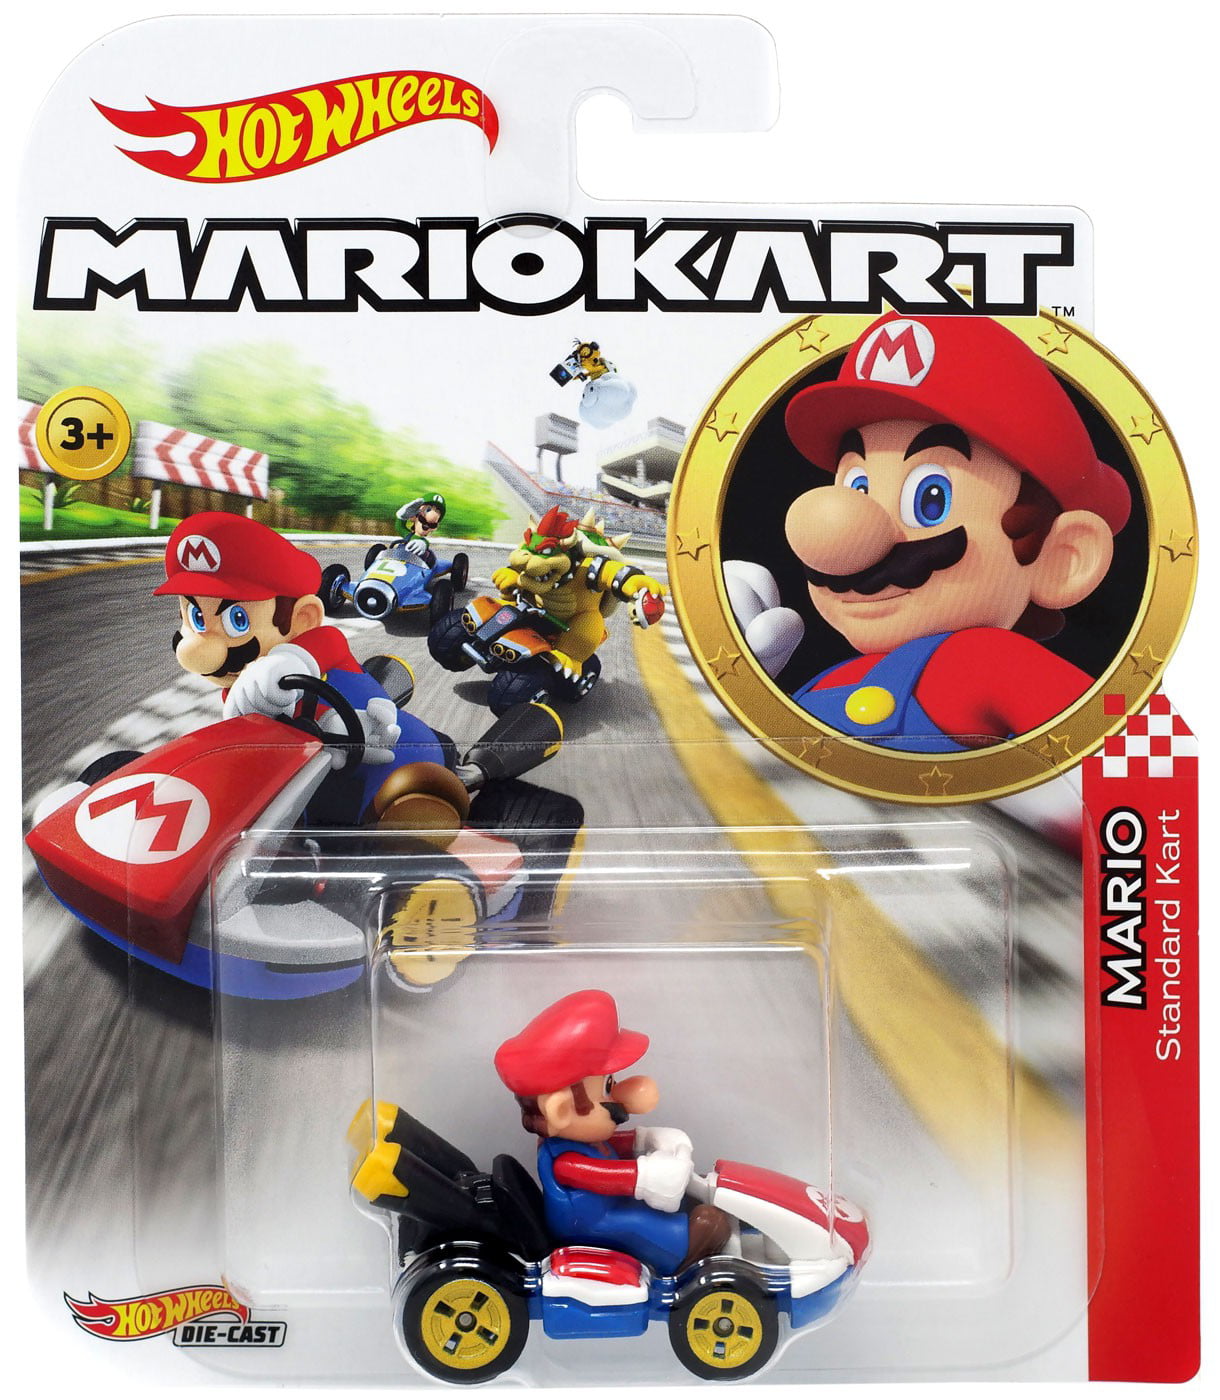 HOT WHEELS Mario Kart Luigi standart Kart 